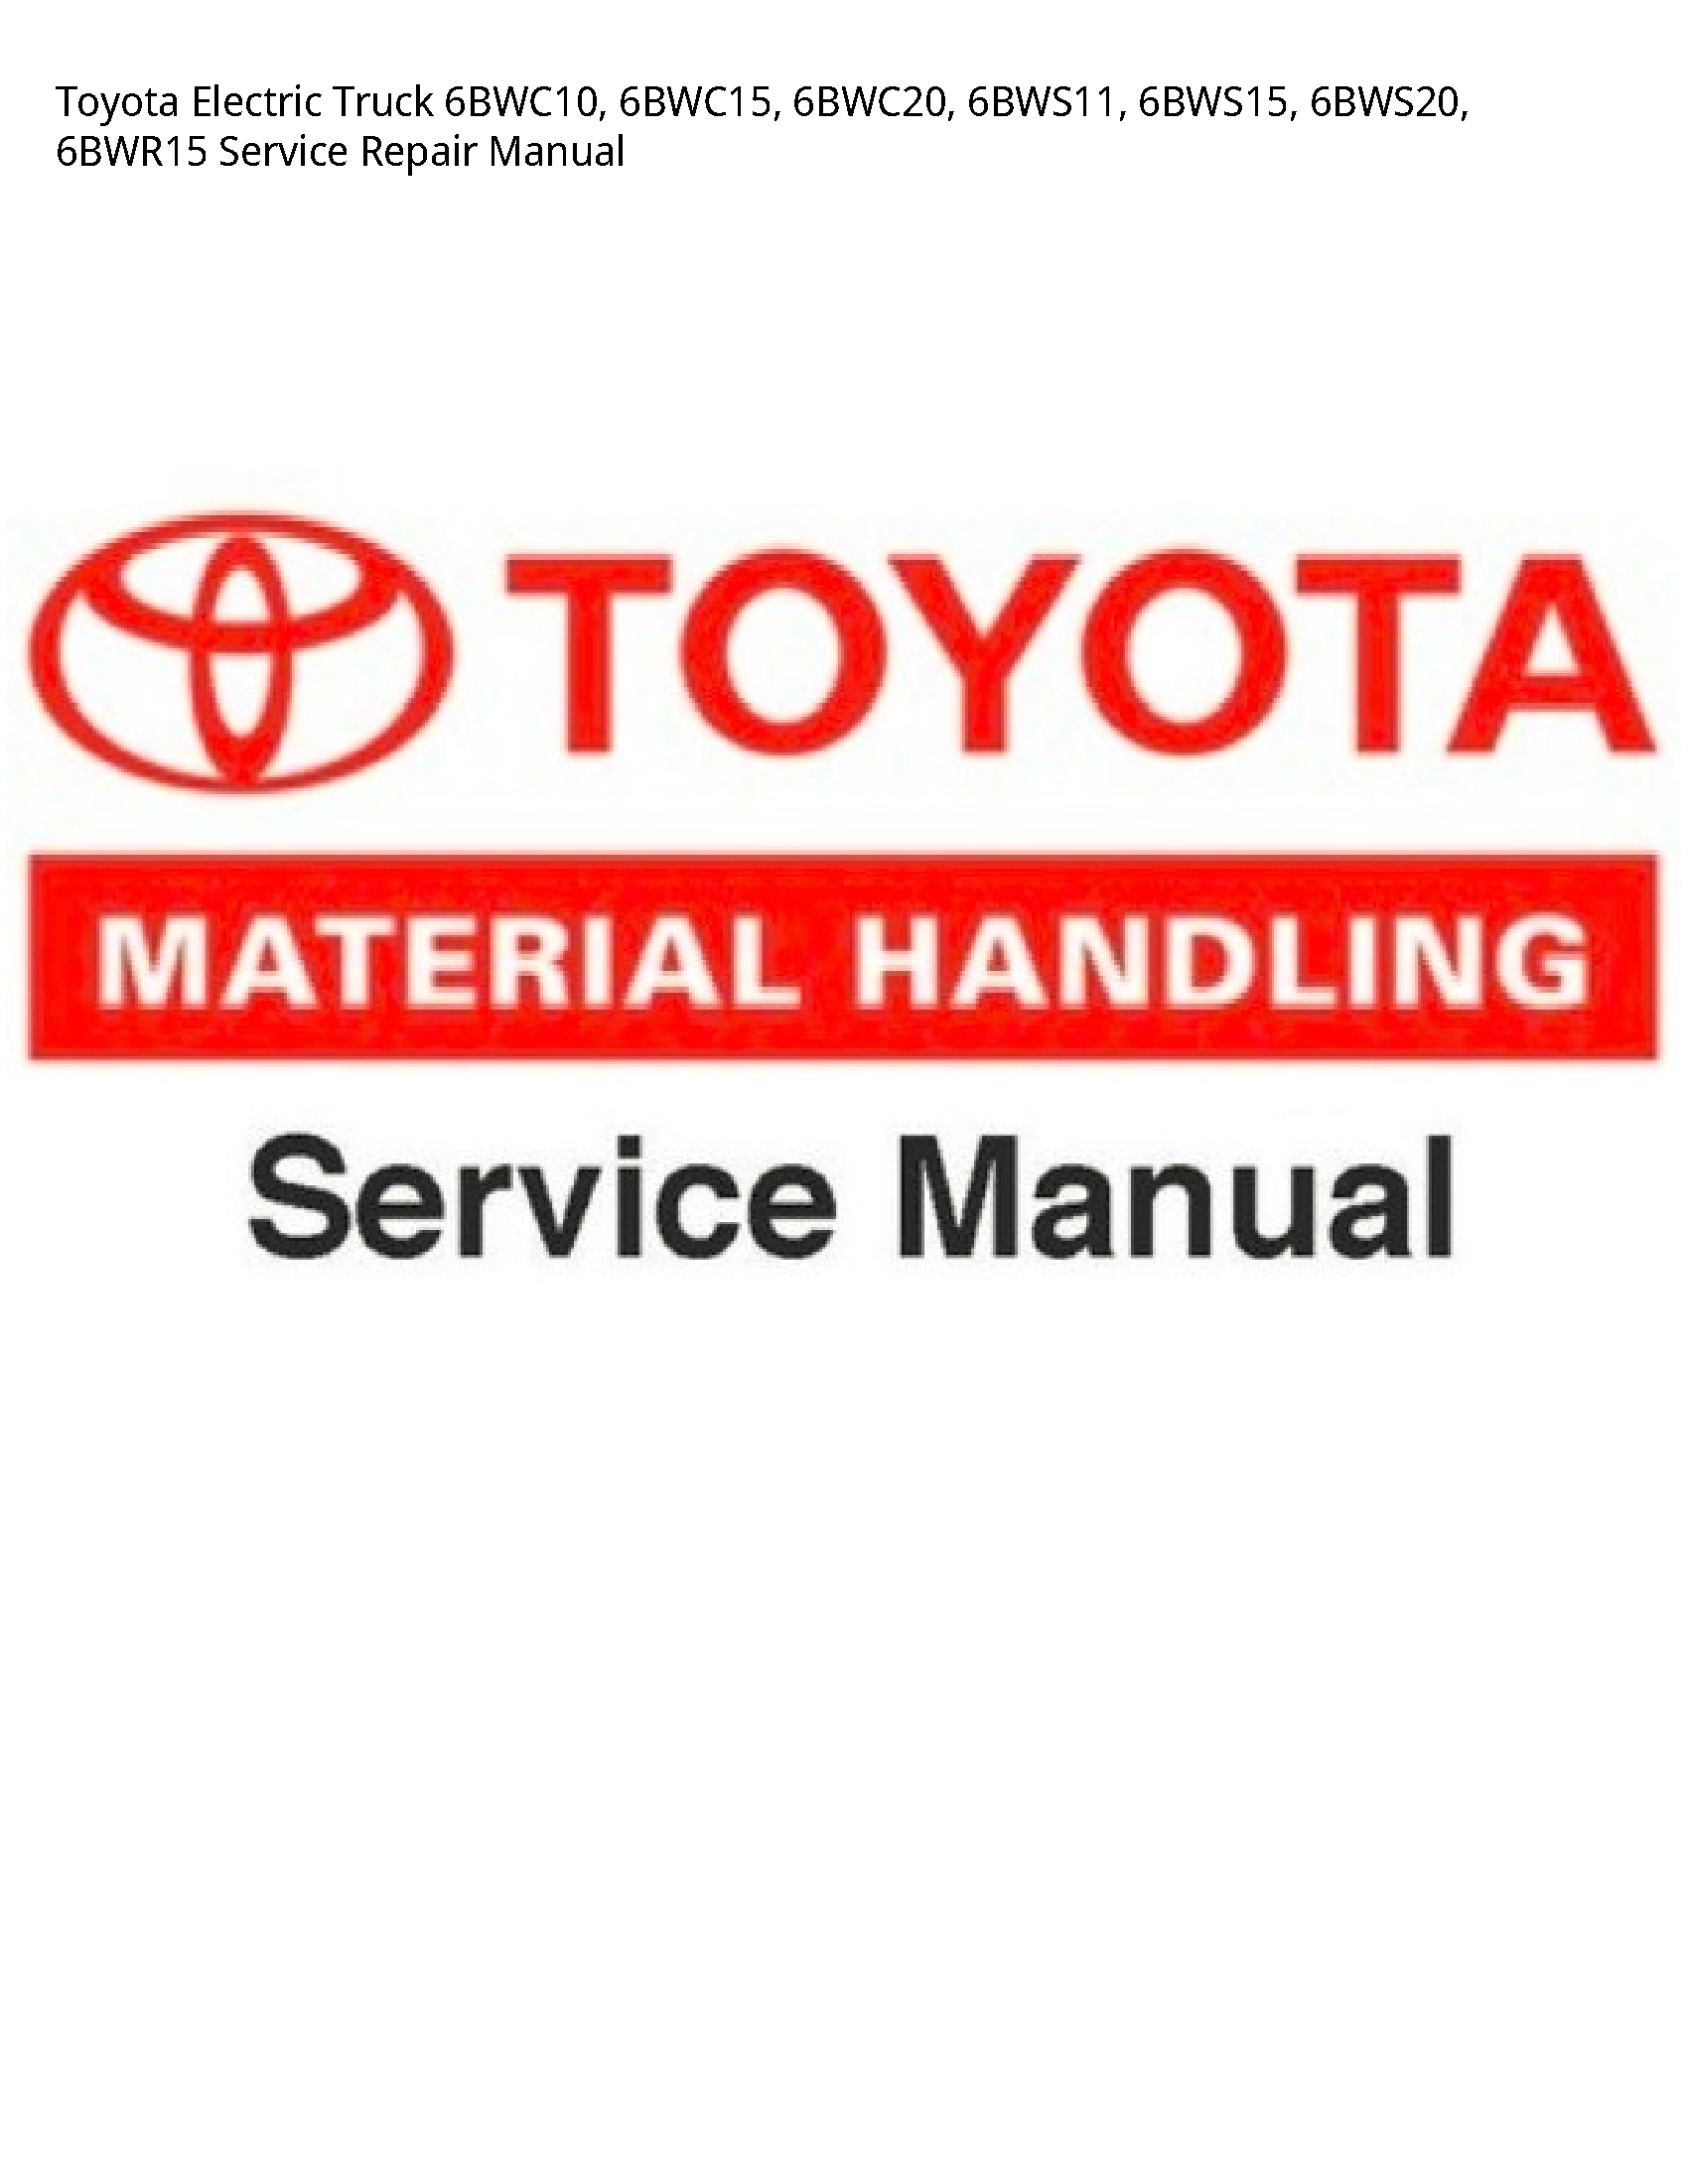 Toyota 6BWC10 Electric Truck manual